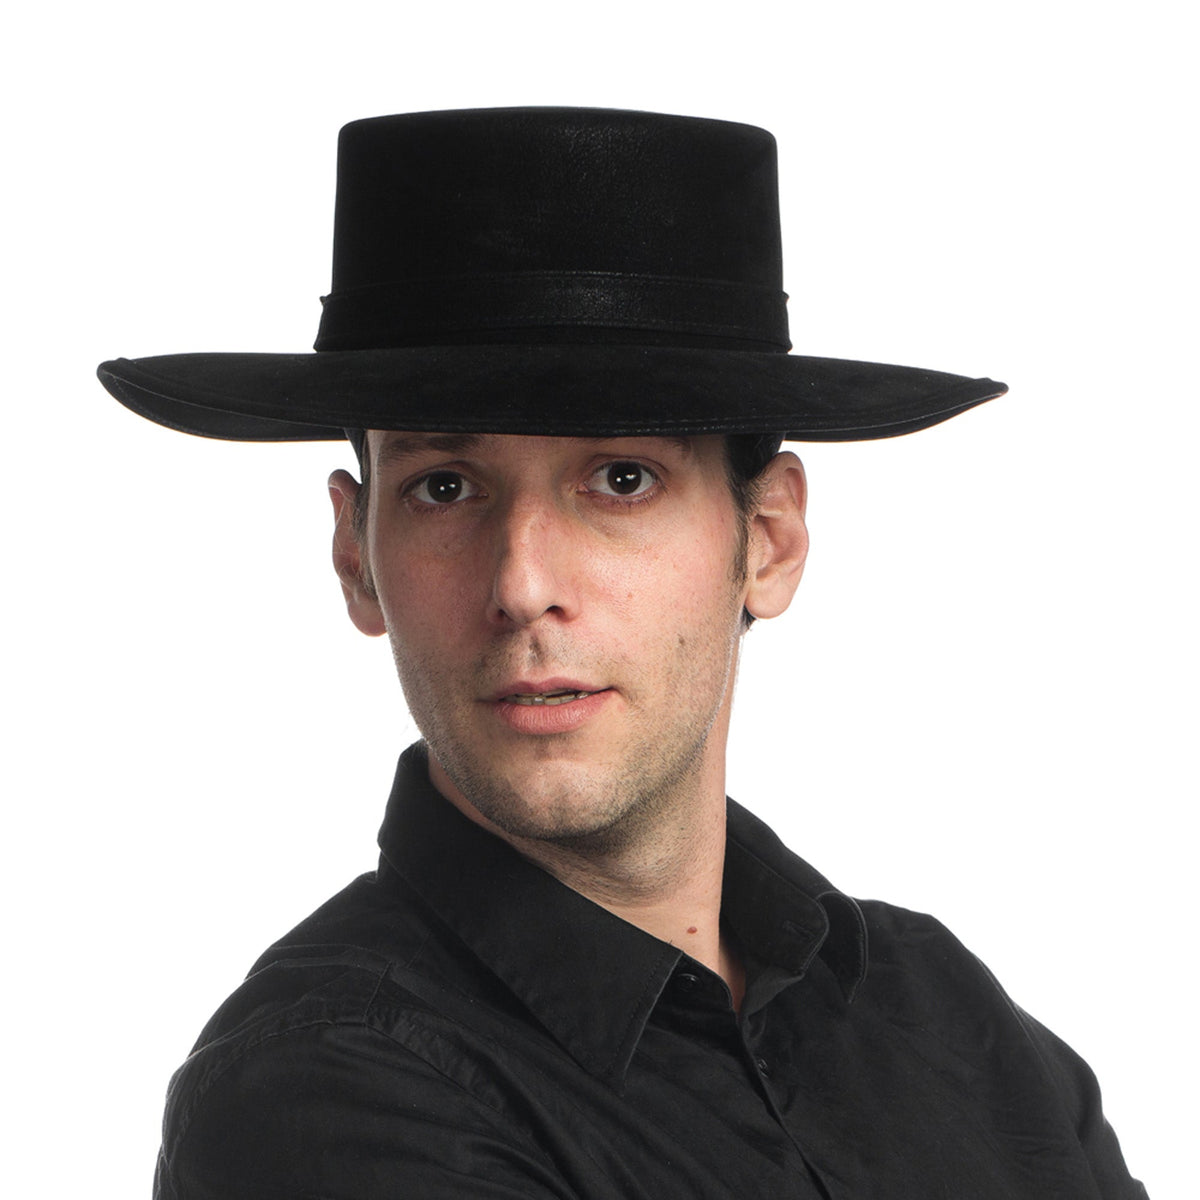 H M NOUVEAUTE LTEE Costume Accessories Black Spanish Hat for Adults 057543891299